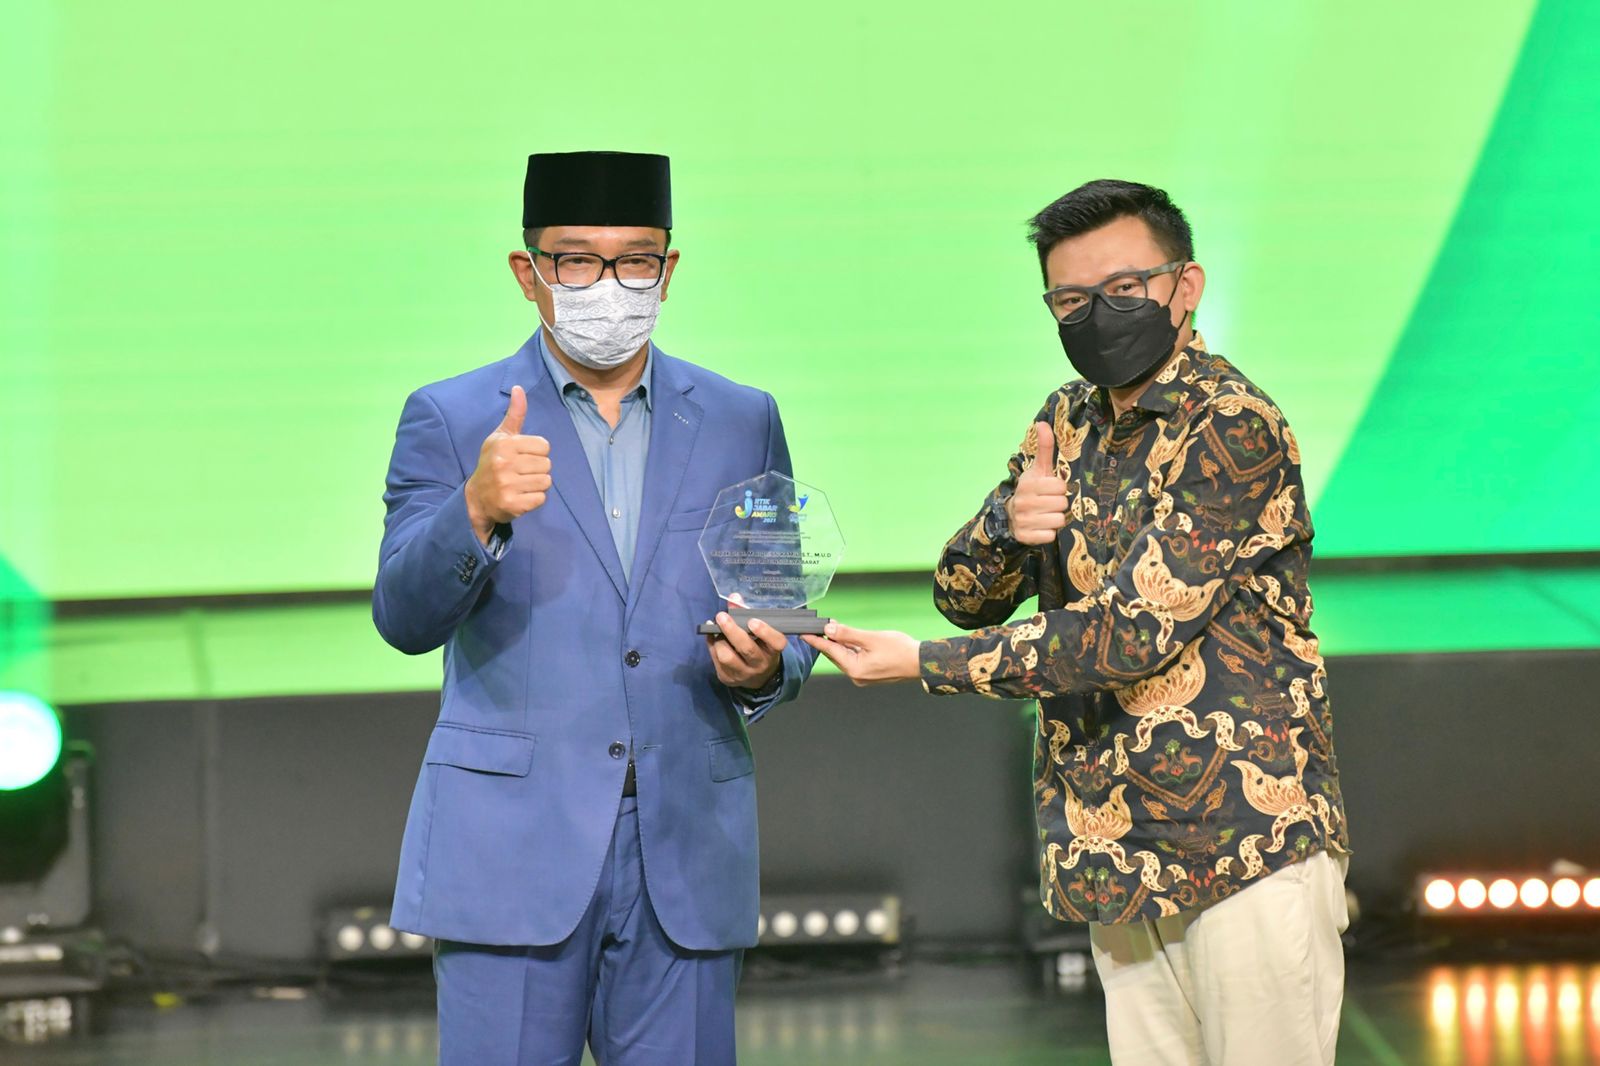 Tokoh Jawara Digital, Penghargaan Untuk Ridwan Kamil Dari Relawan TIK